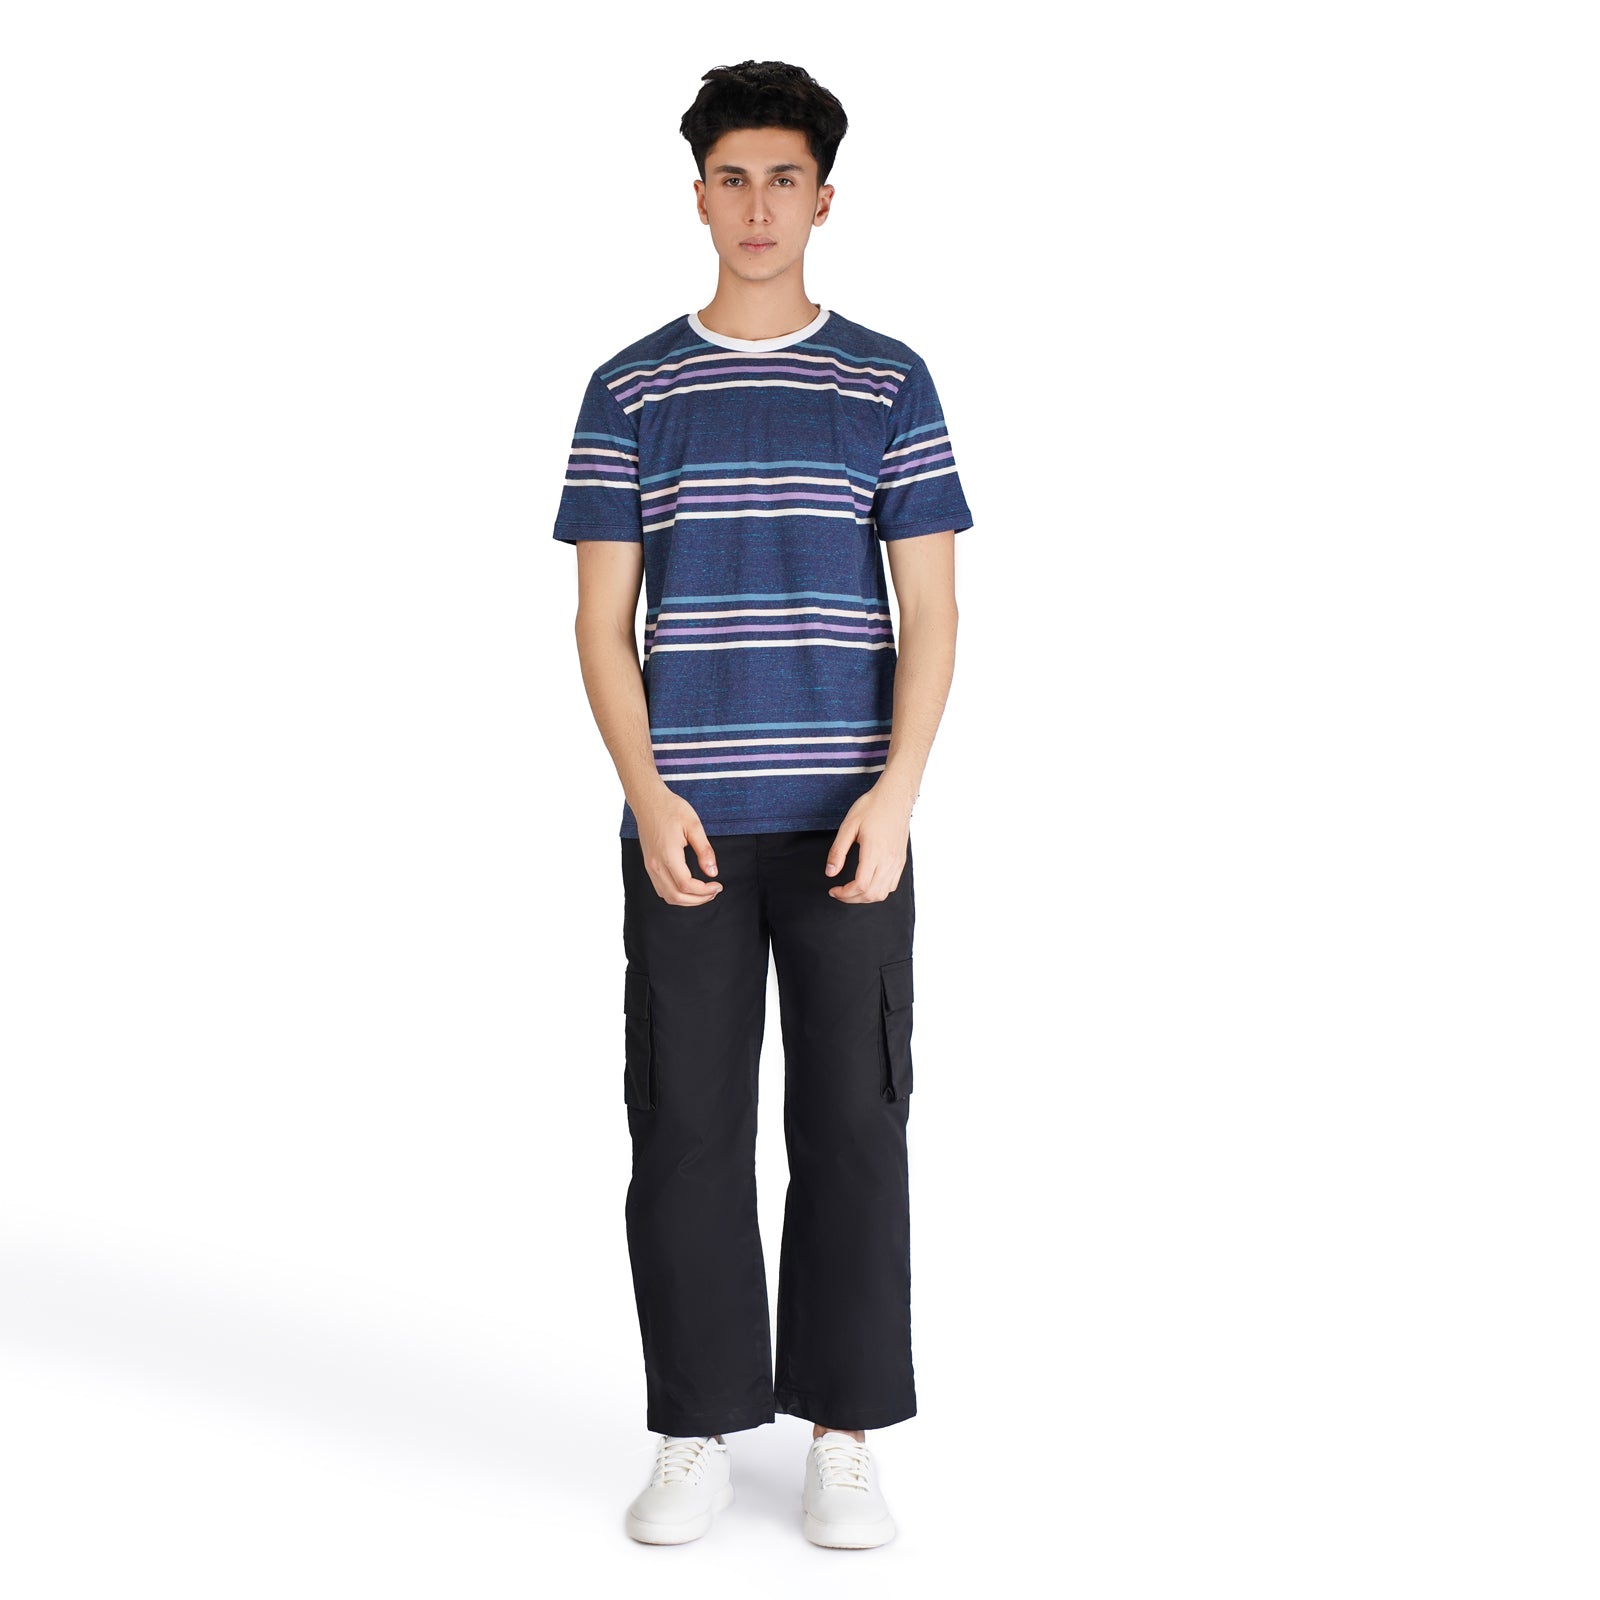 Multi Color Striped T-Shirt - OSSM1230030